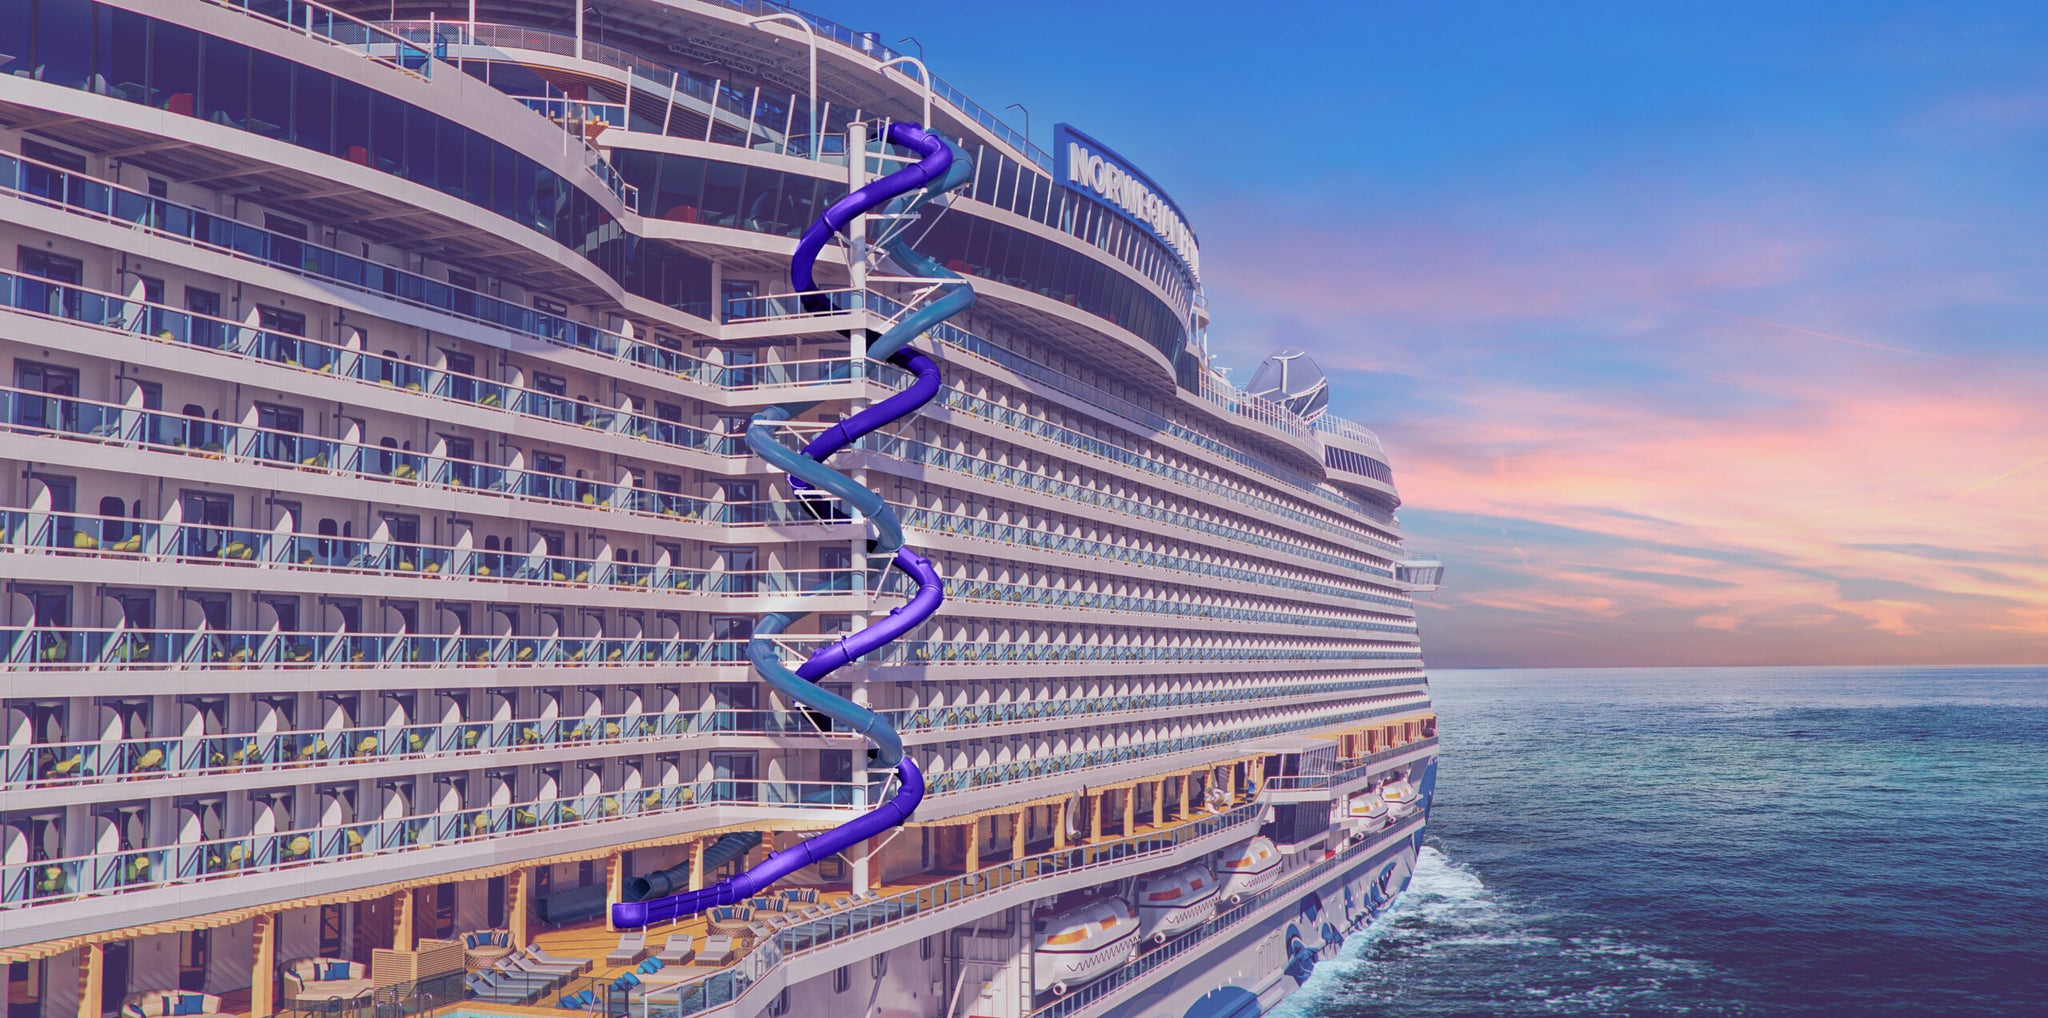 Norwegian Prima sneak peek Inside Norwegian Cruise Line's next new